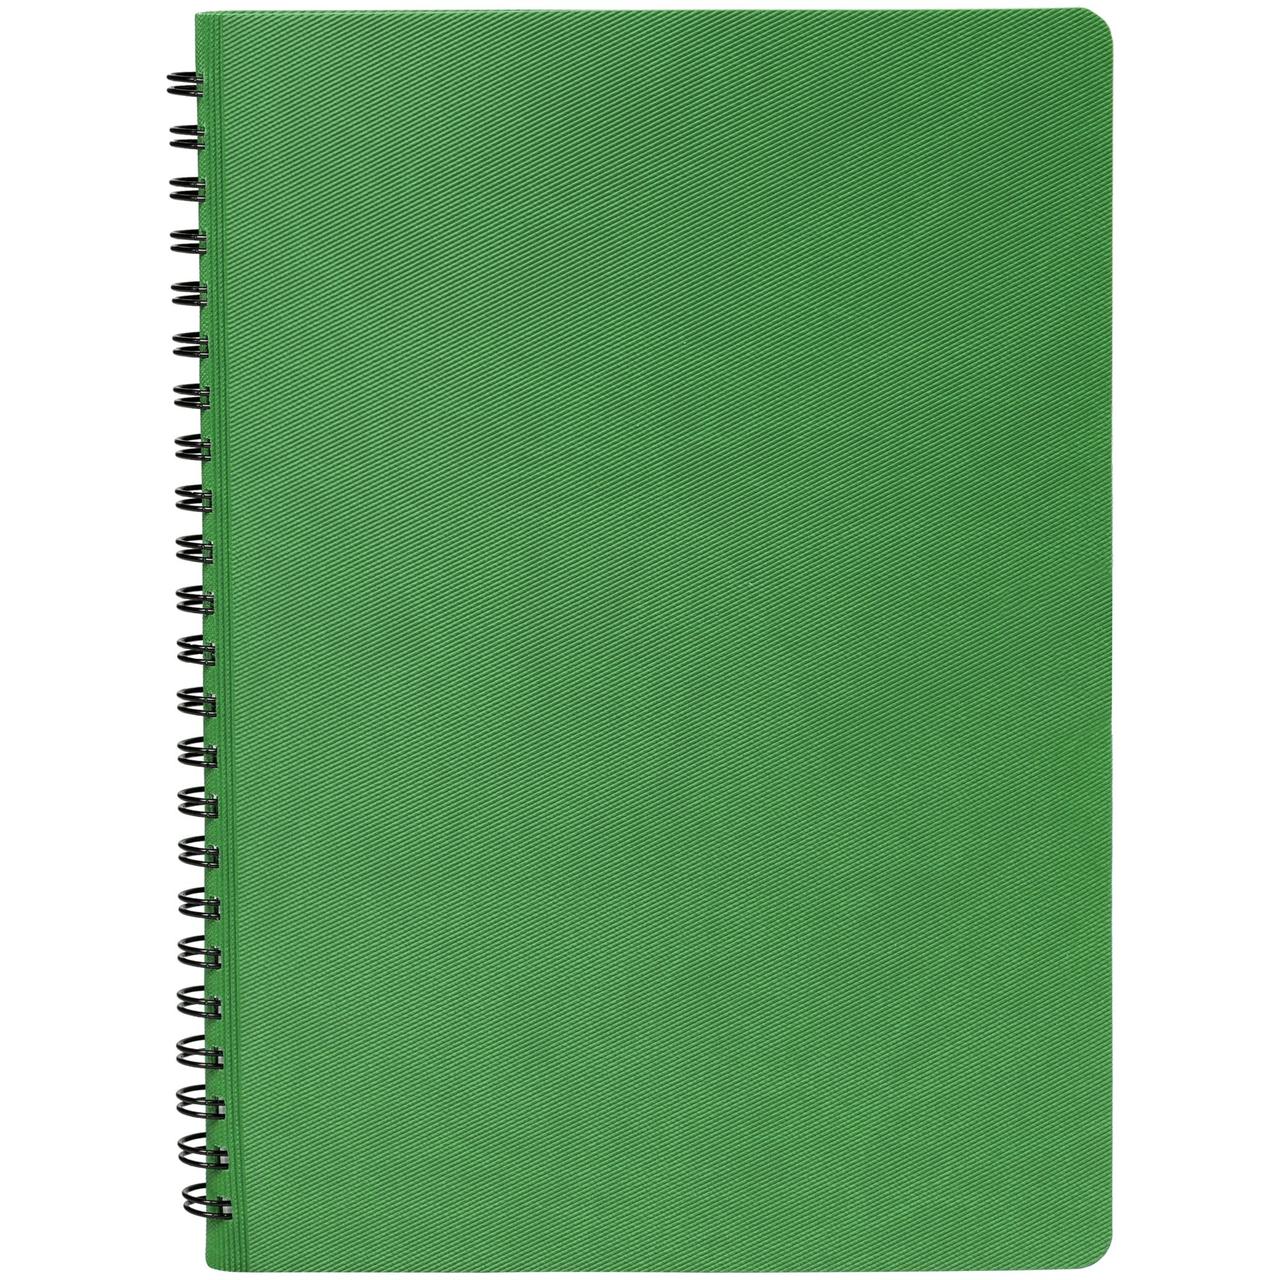 Ежедневник Twill, недатированный, зеленый (артикул 11862.99), фото 1